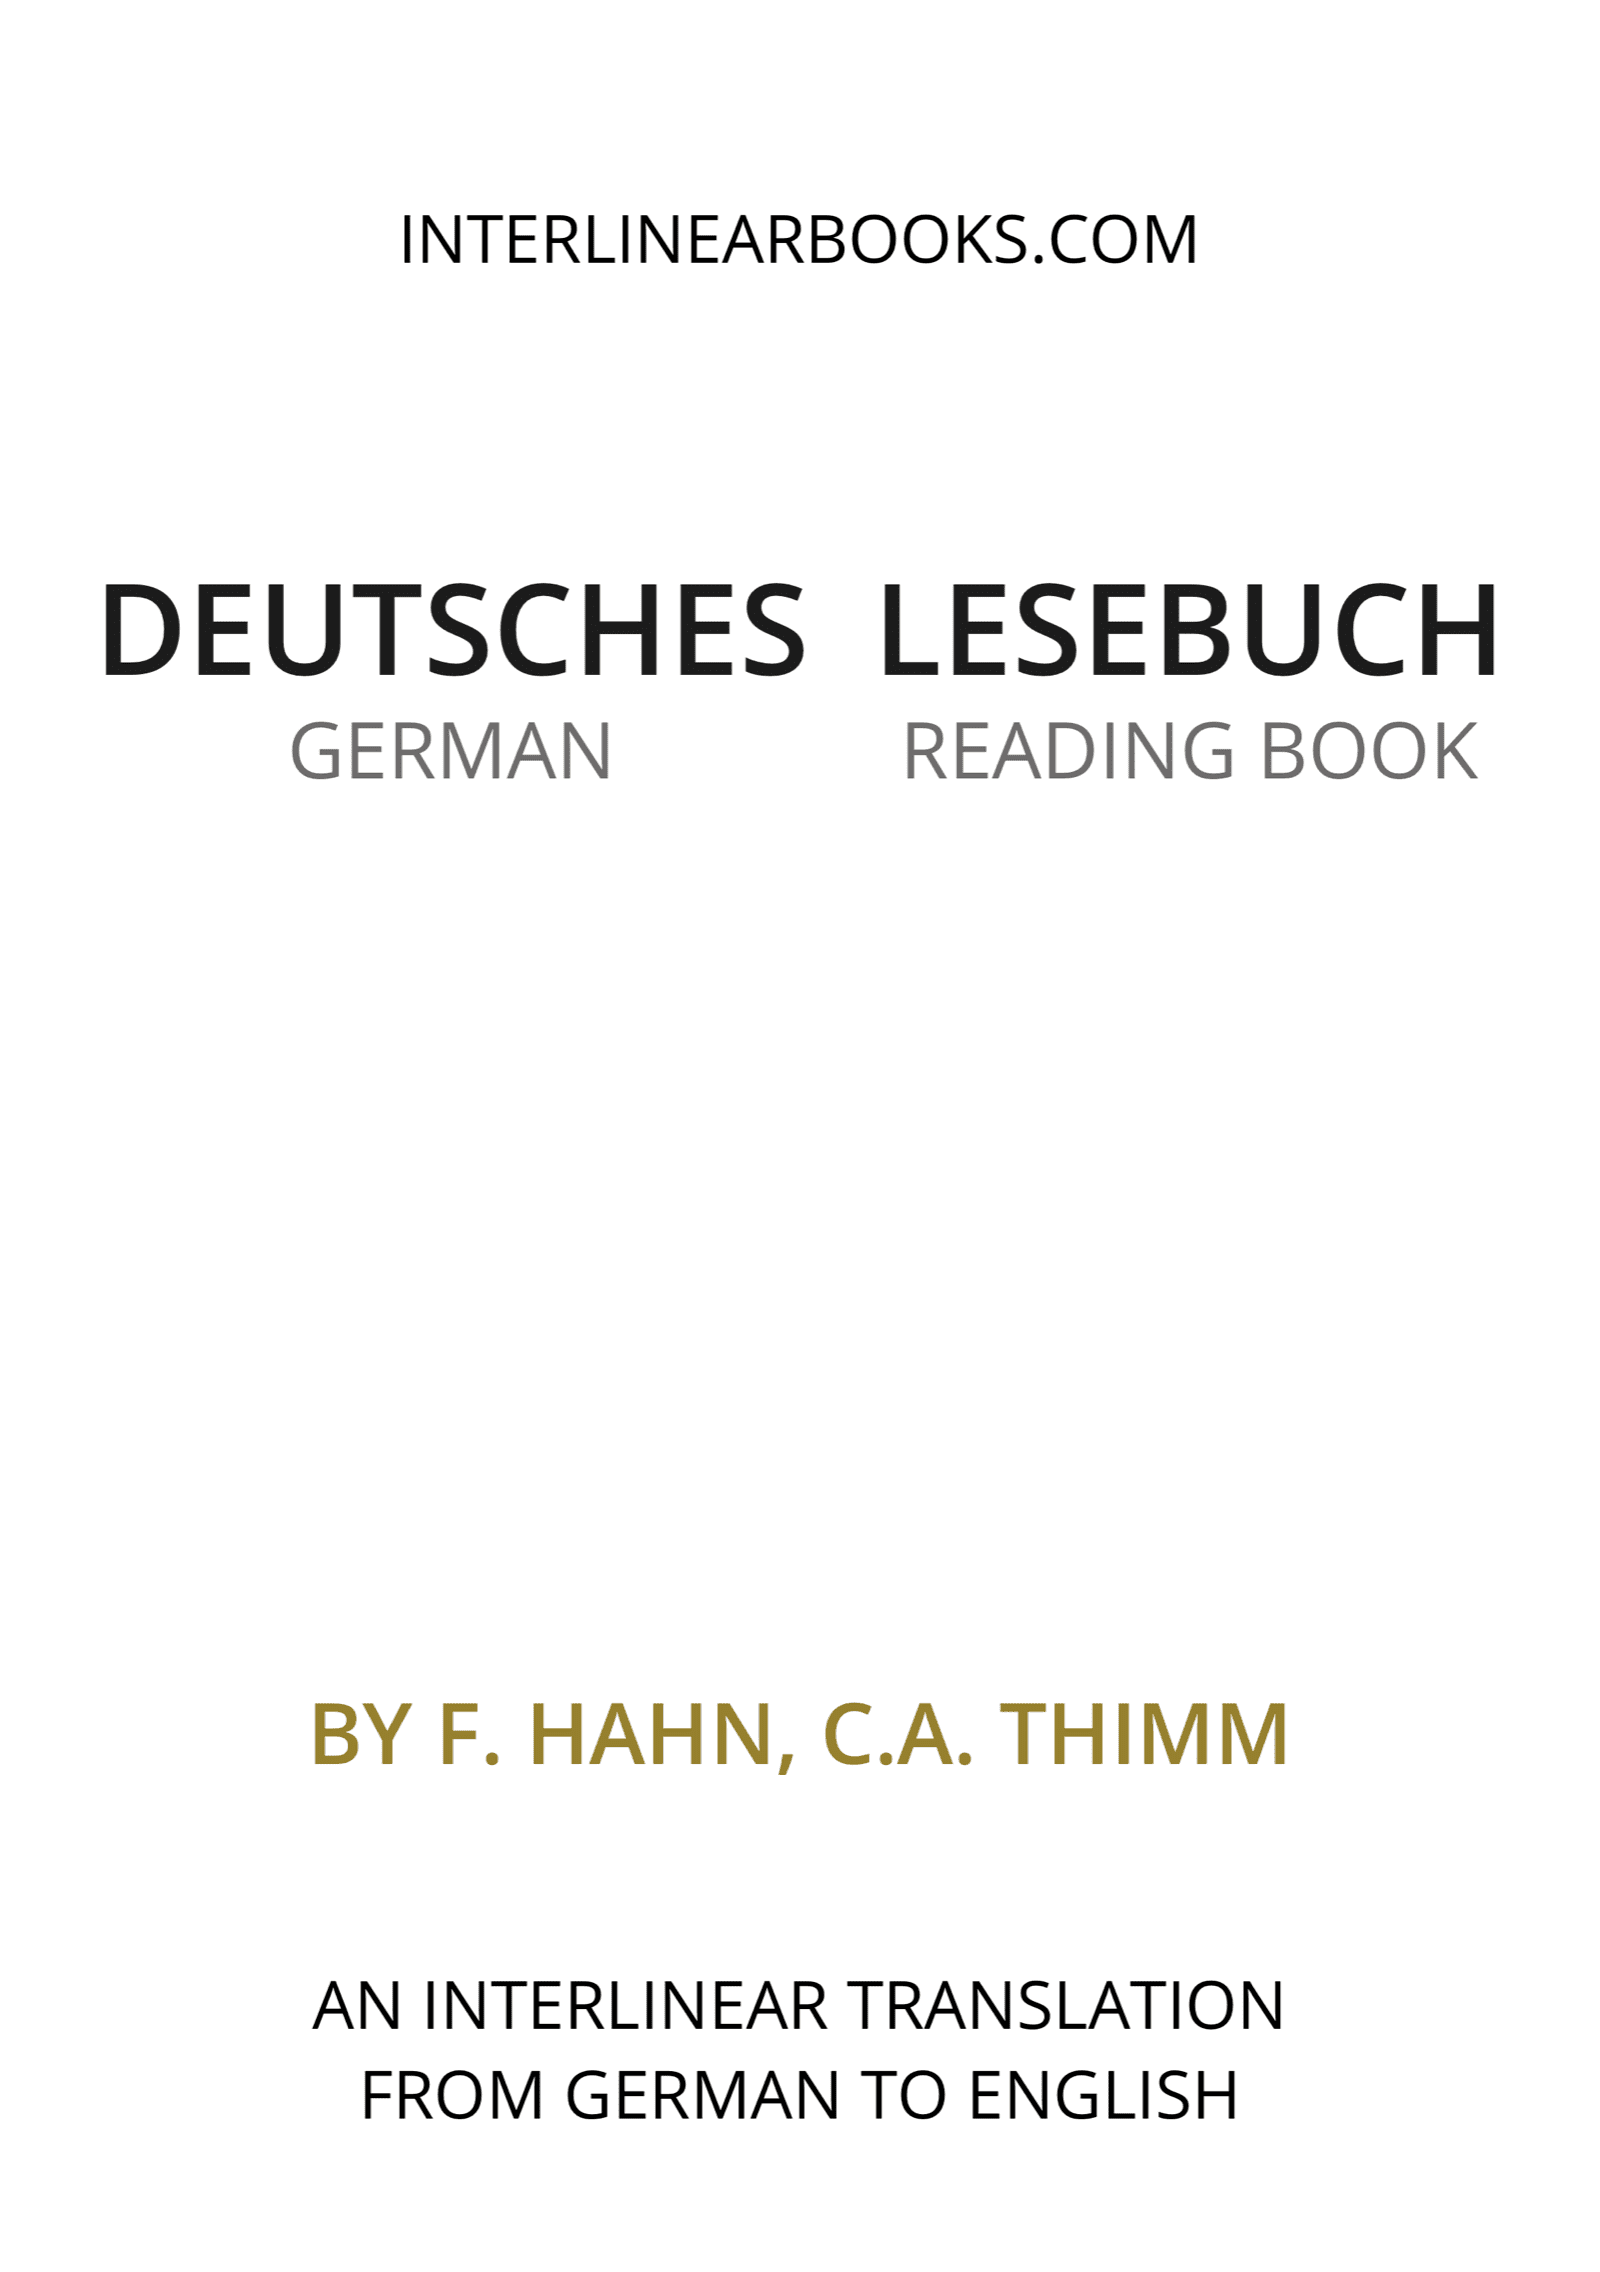 German book: Deutsches Lesebuch / German Reading Book